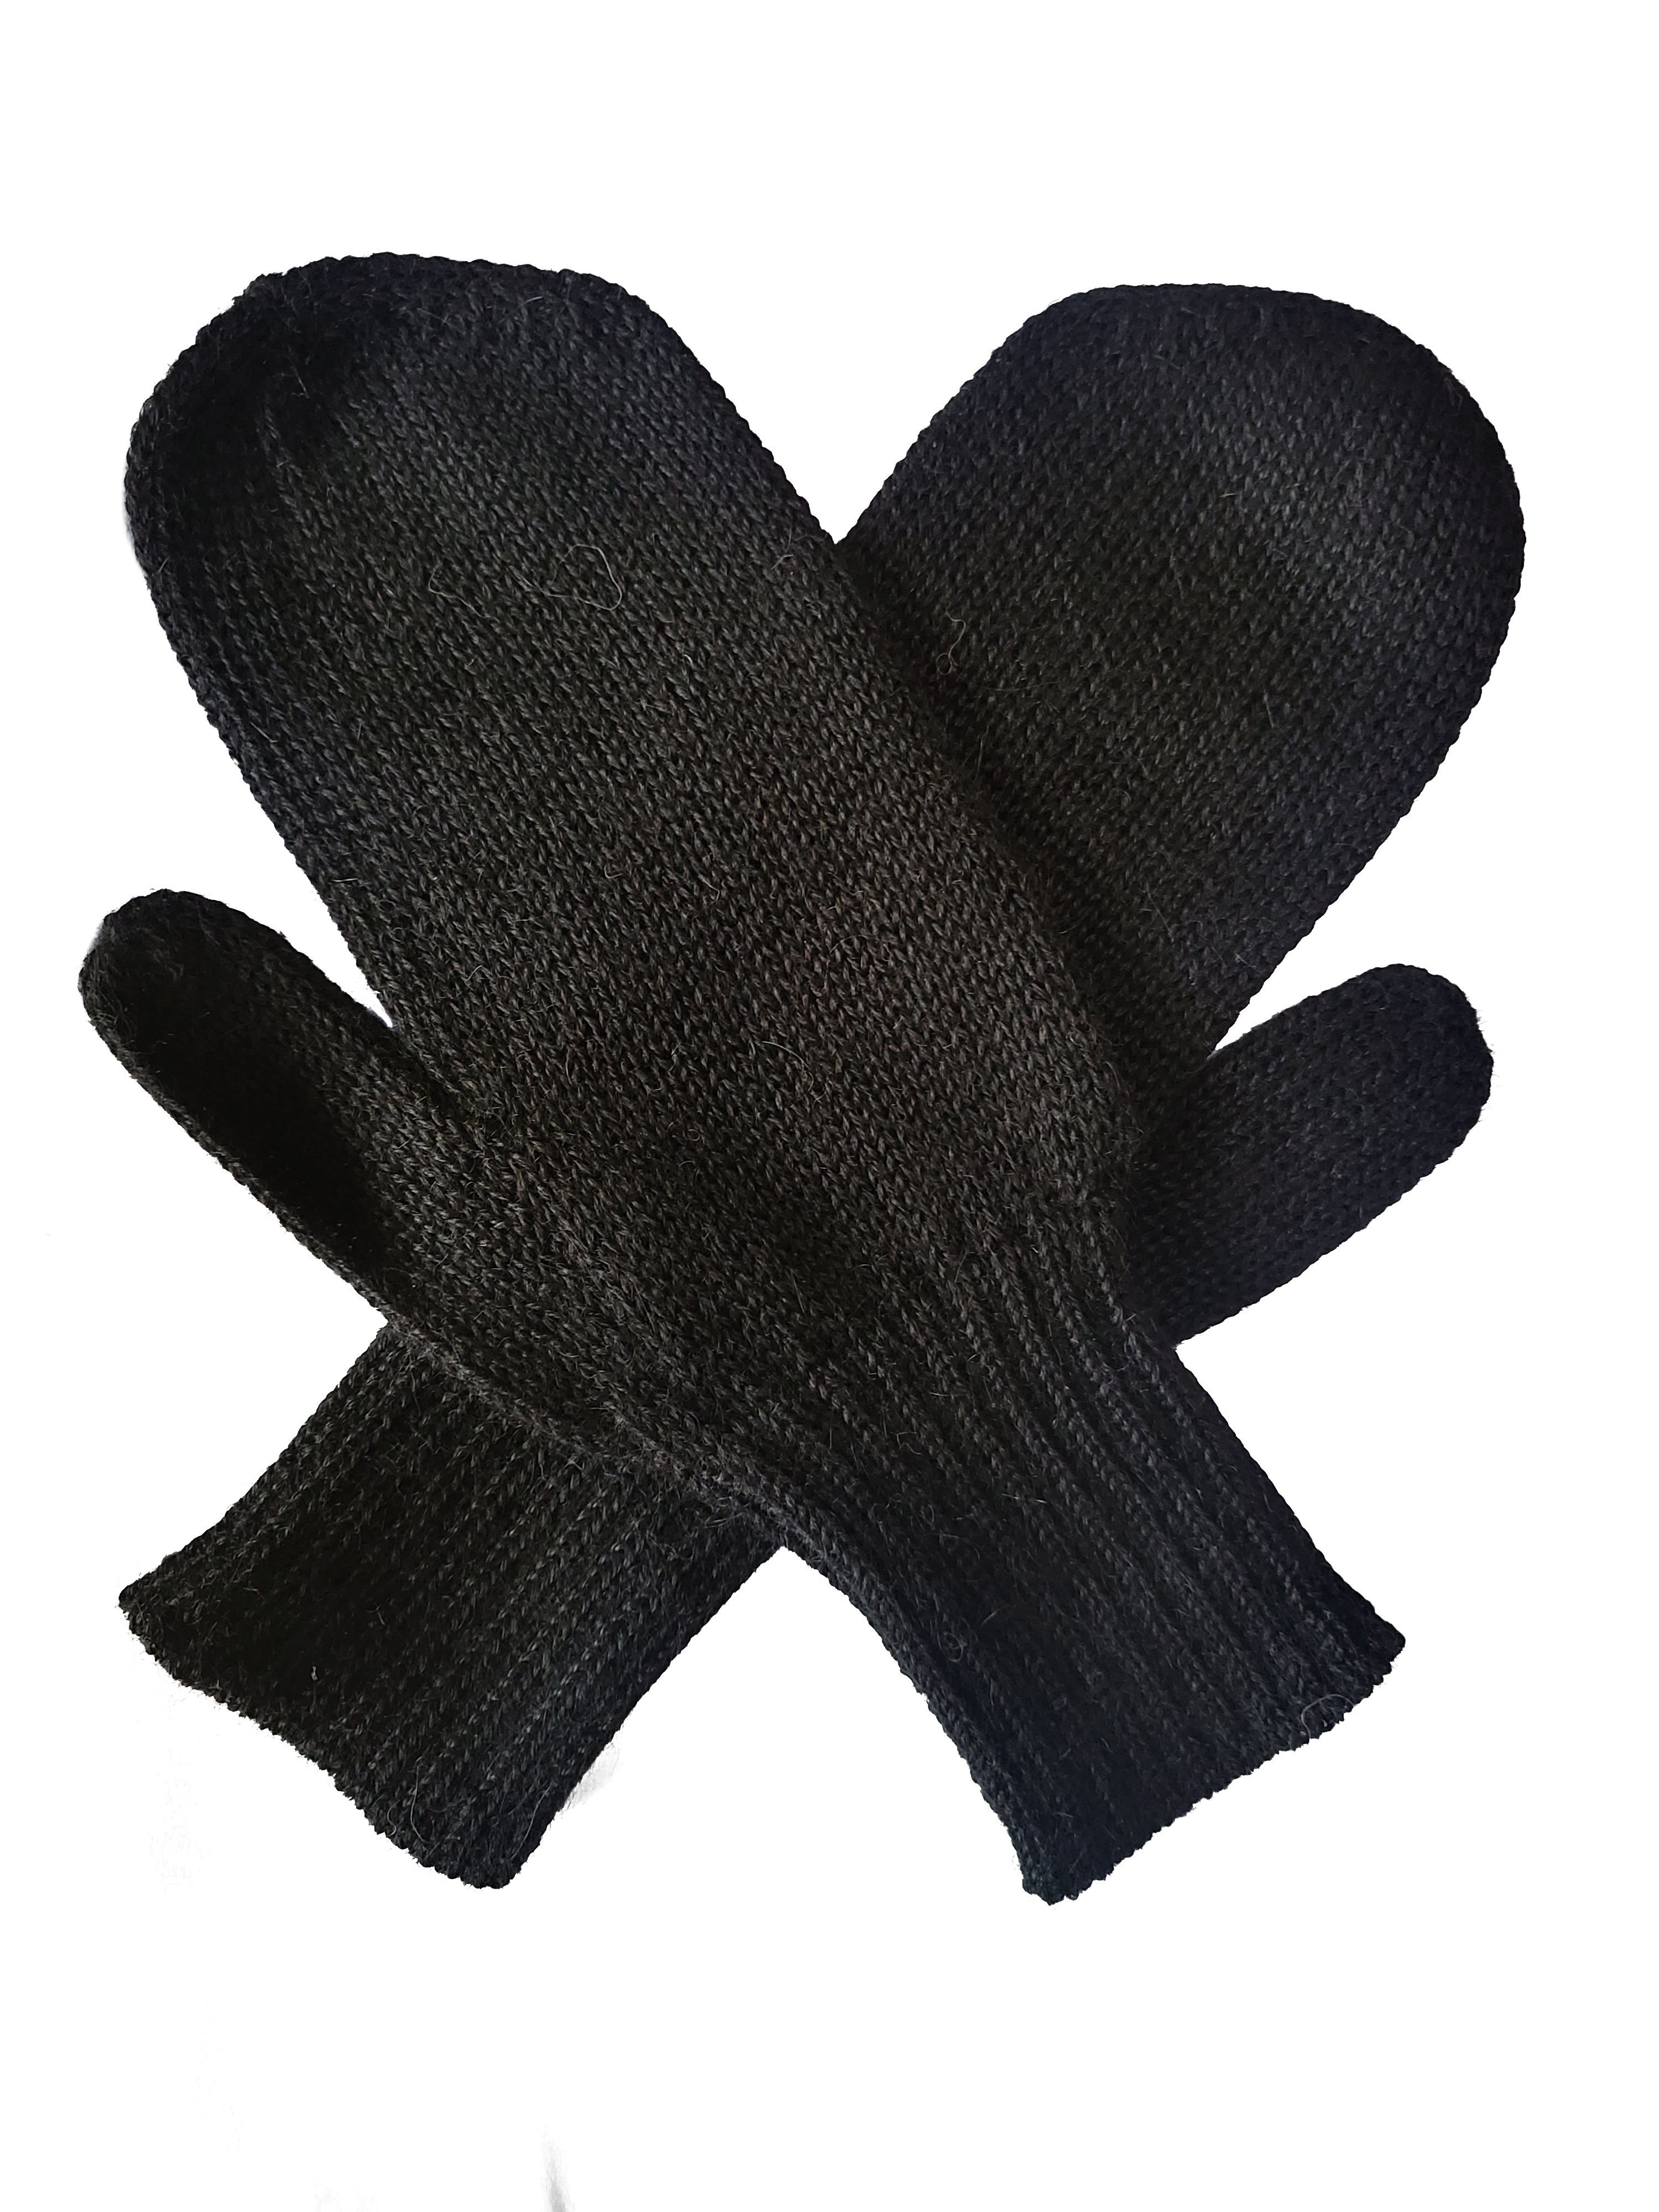 Fäustlinge Handschuhe Alpakawolle Posh 100% Damen aus Herren Alpaka Gear schwarz Pugnoguanti